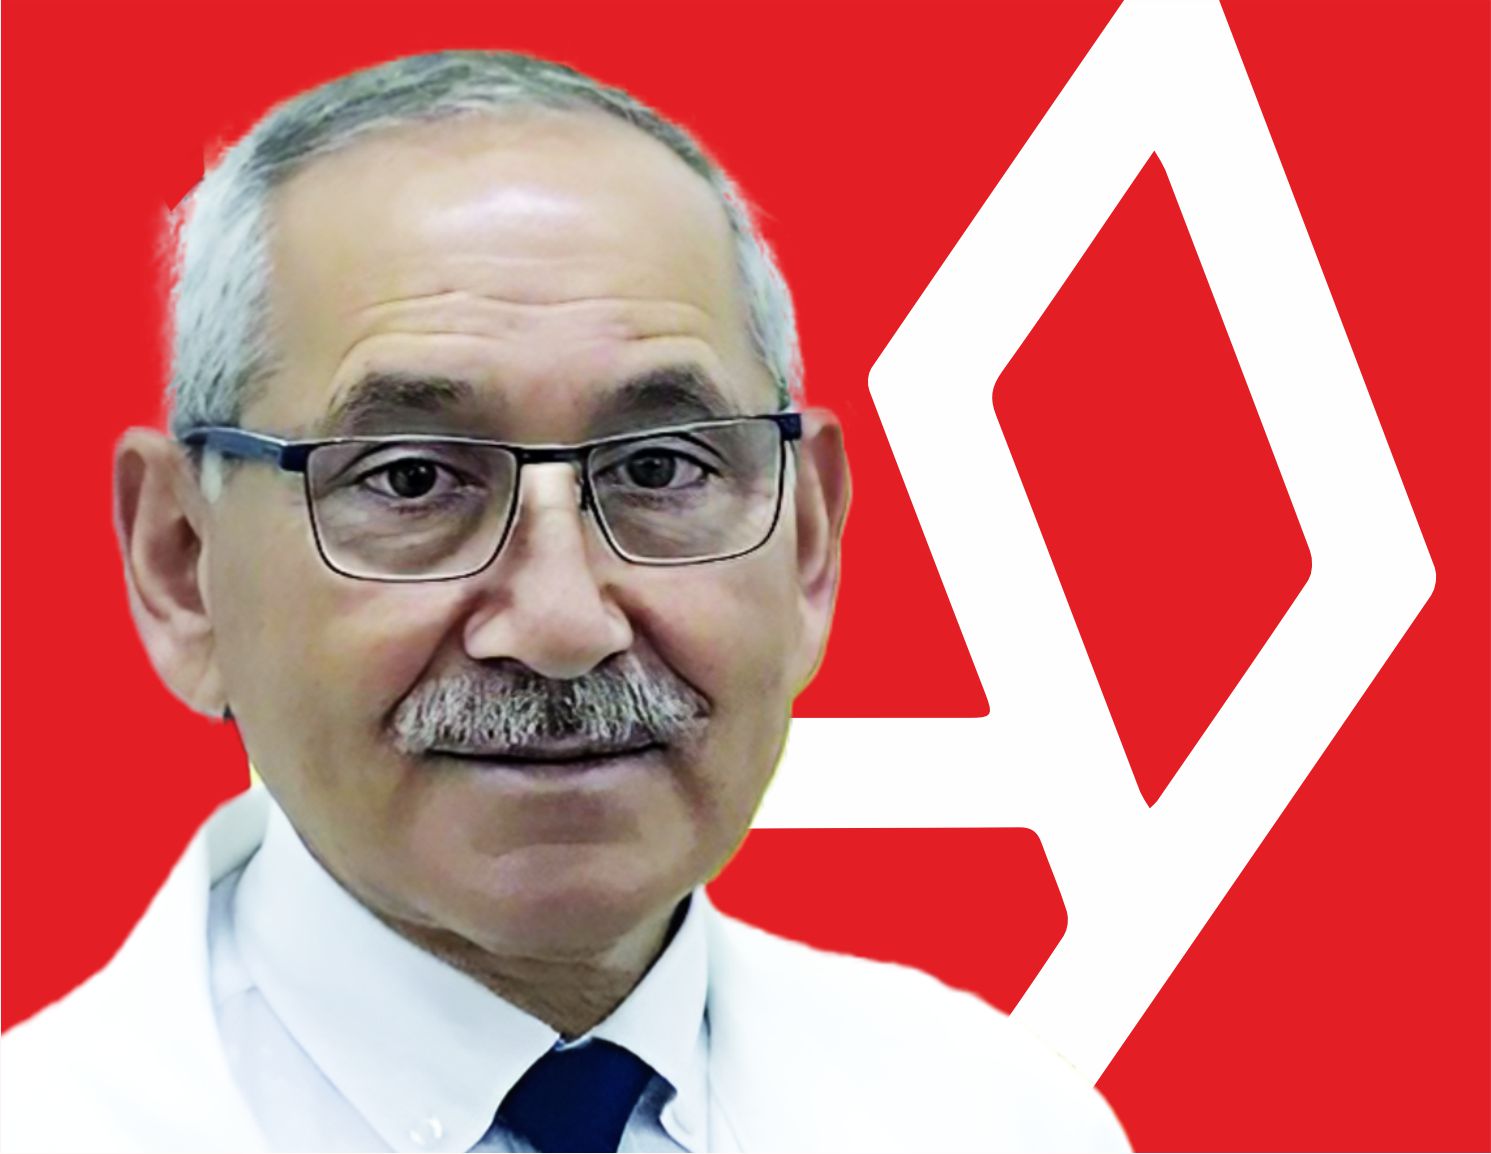 Prof. Dr. Davut ALPTEKİN